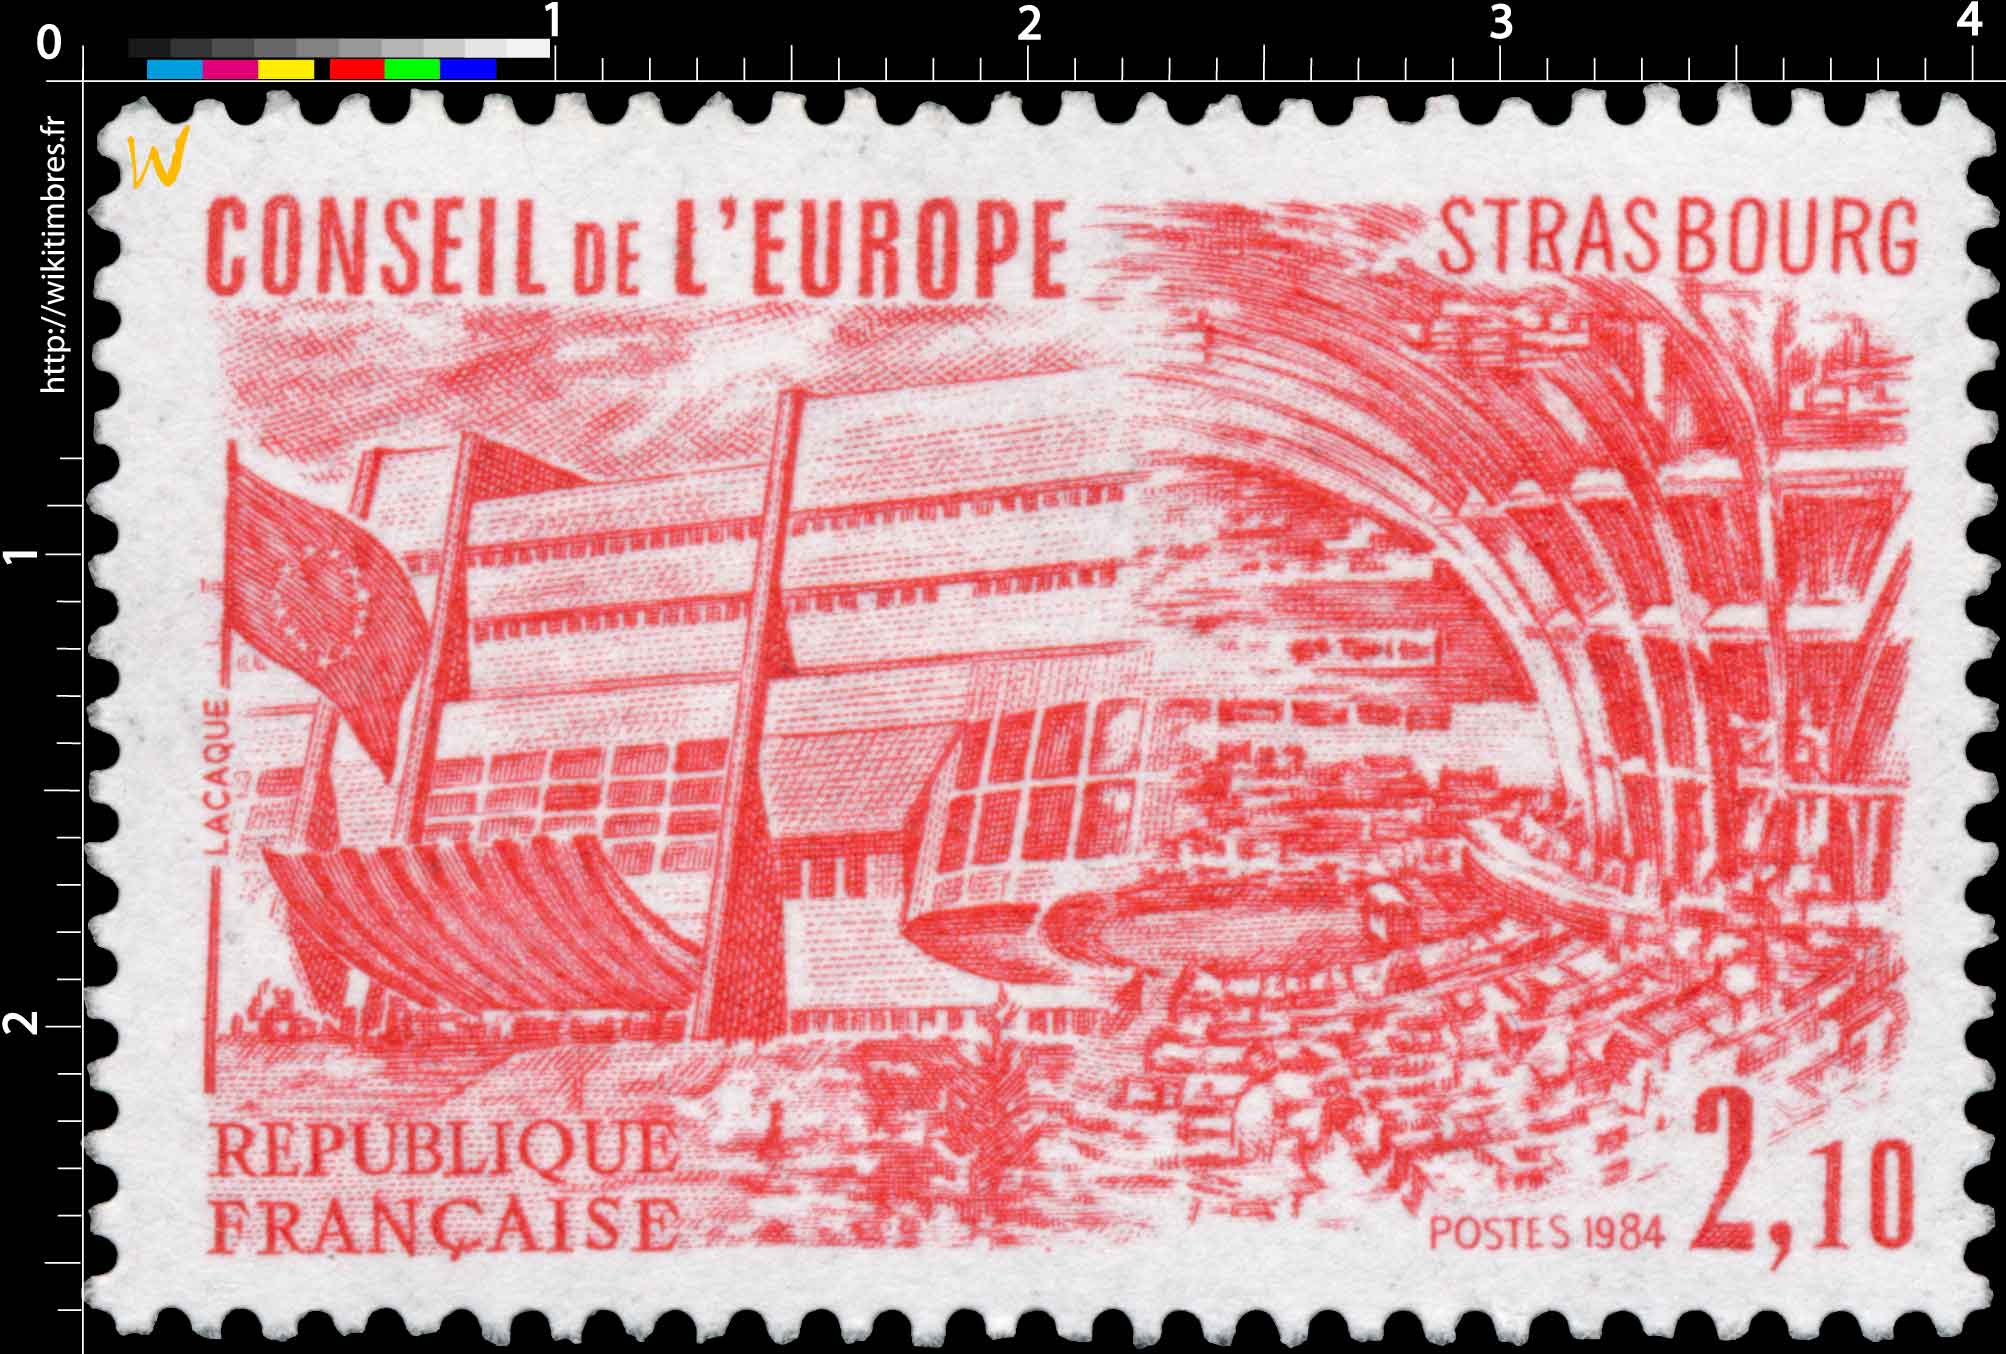 1984 CONSEIL DE L'EUROPE STRASBOURG